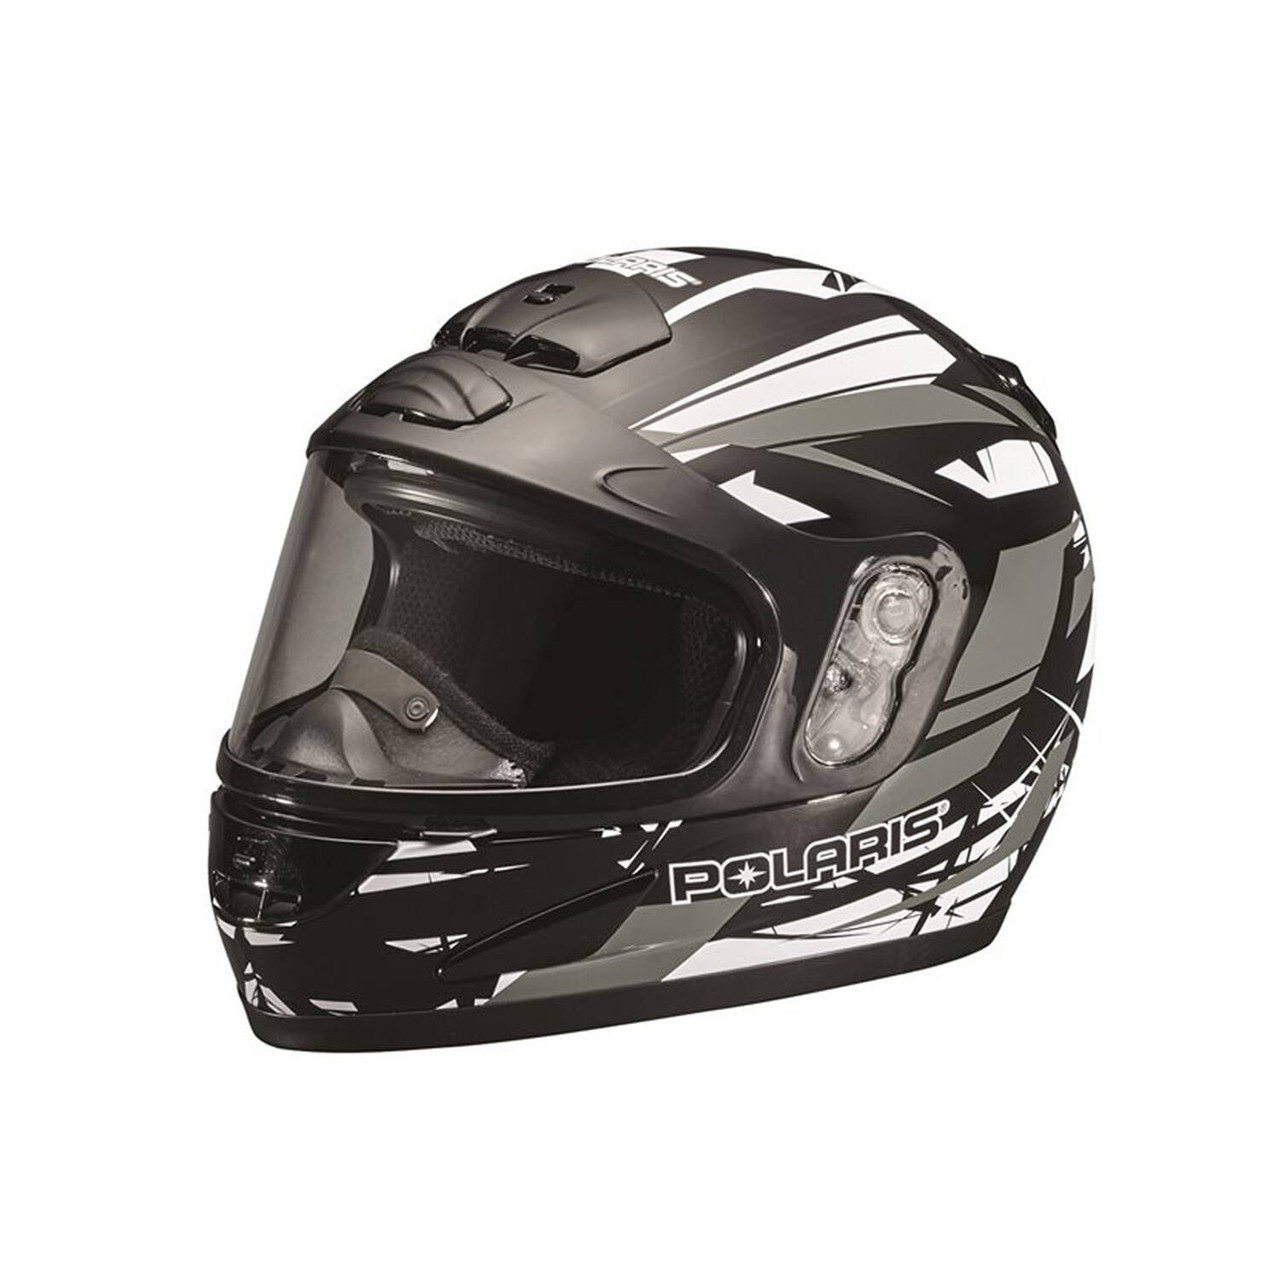 Polaris New OEM Youth Medium Helmet with Built-In Breath Deflector,286774703